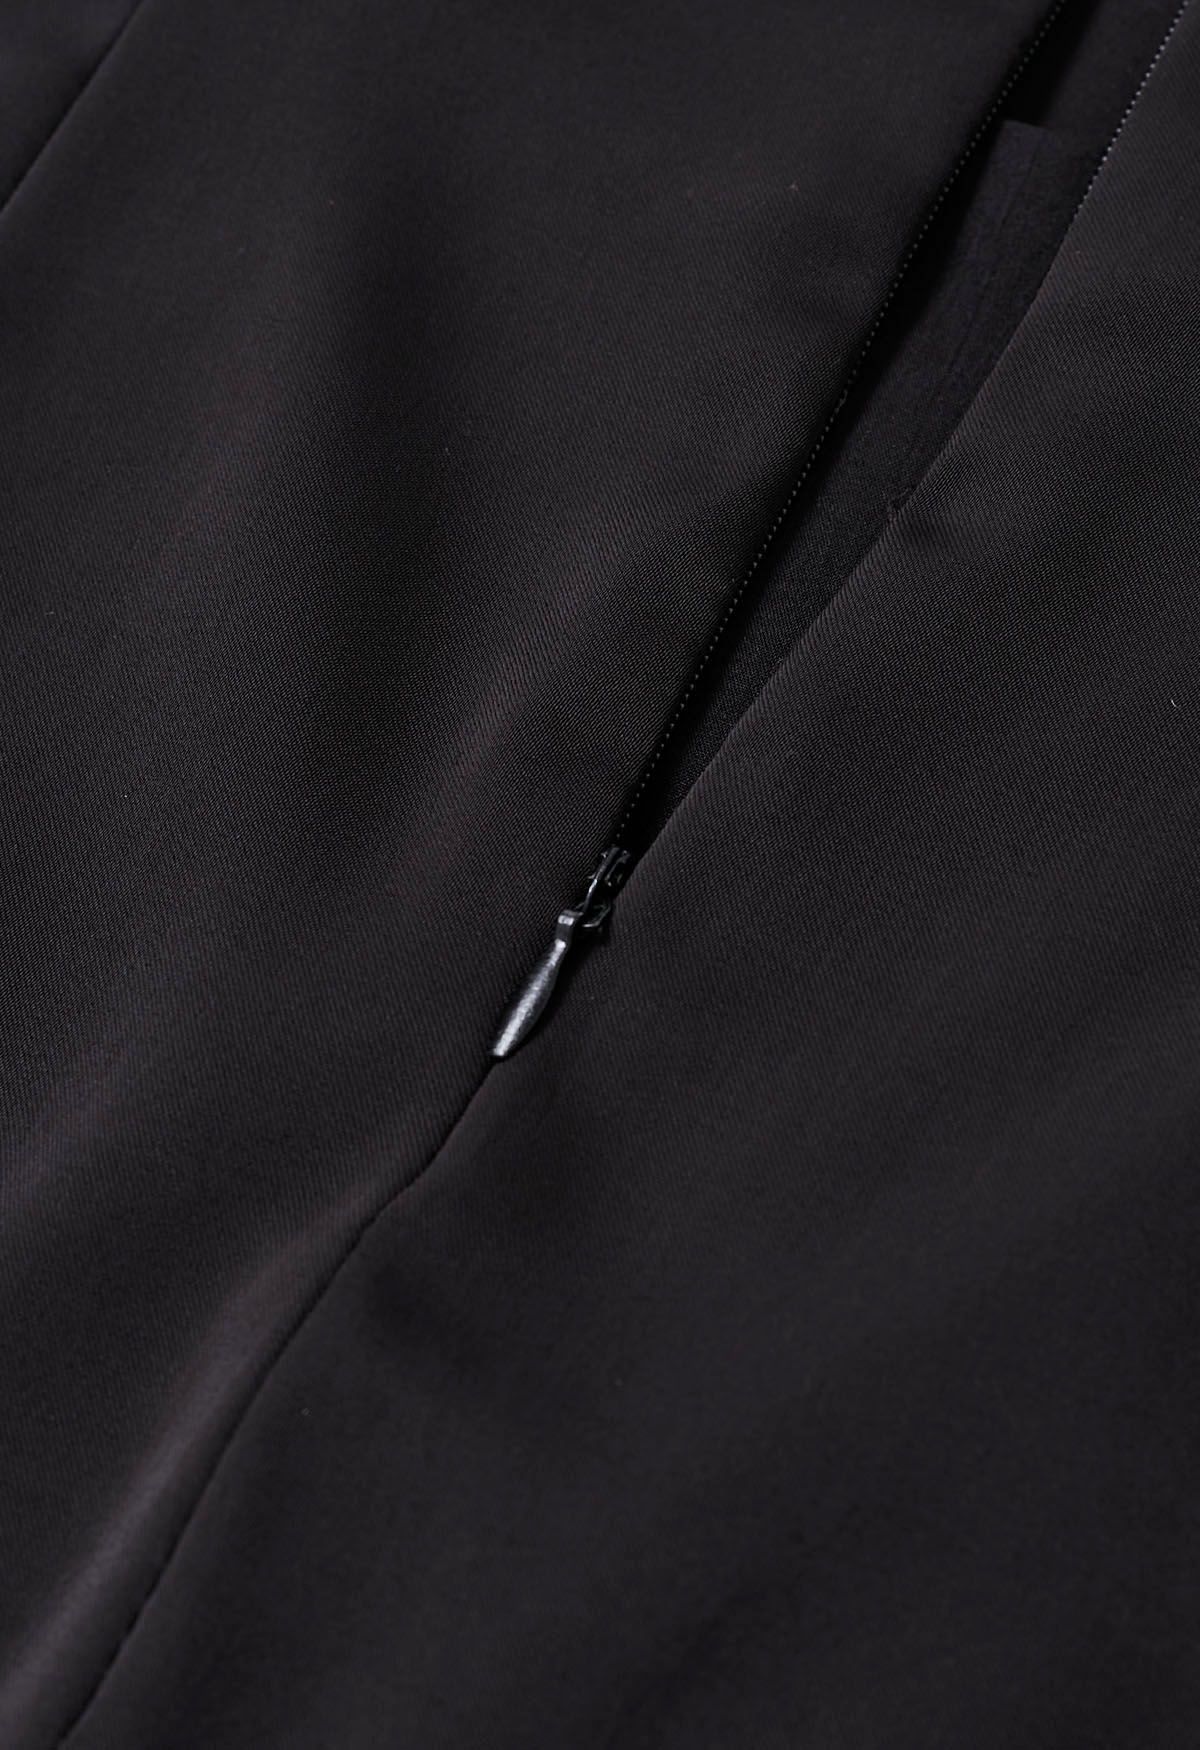 Tie String Satin Maxi Skirt in Black - Retro, Indie and Unique Fashion